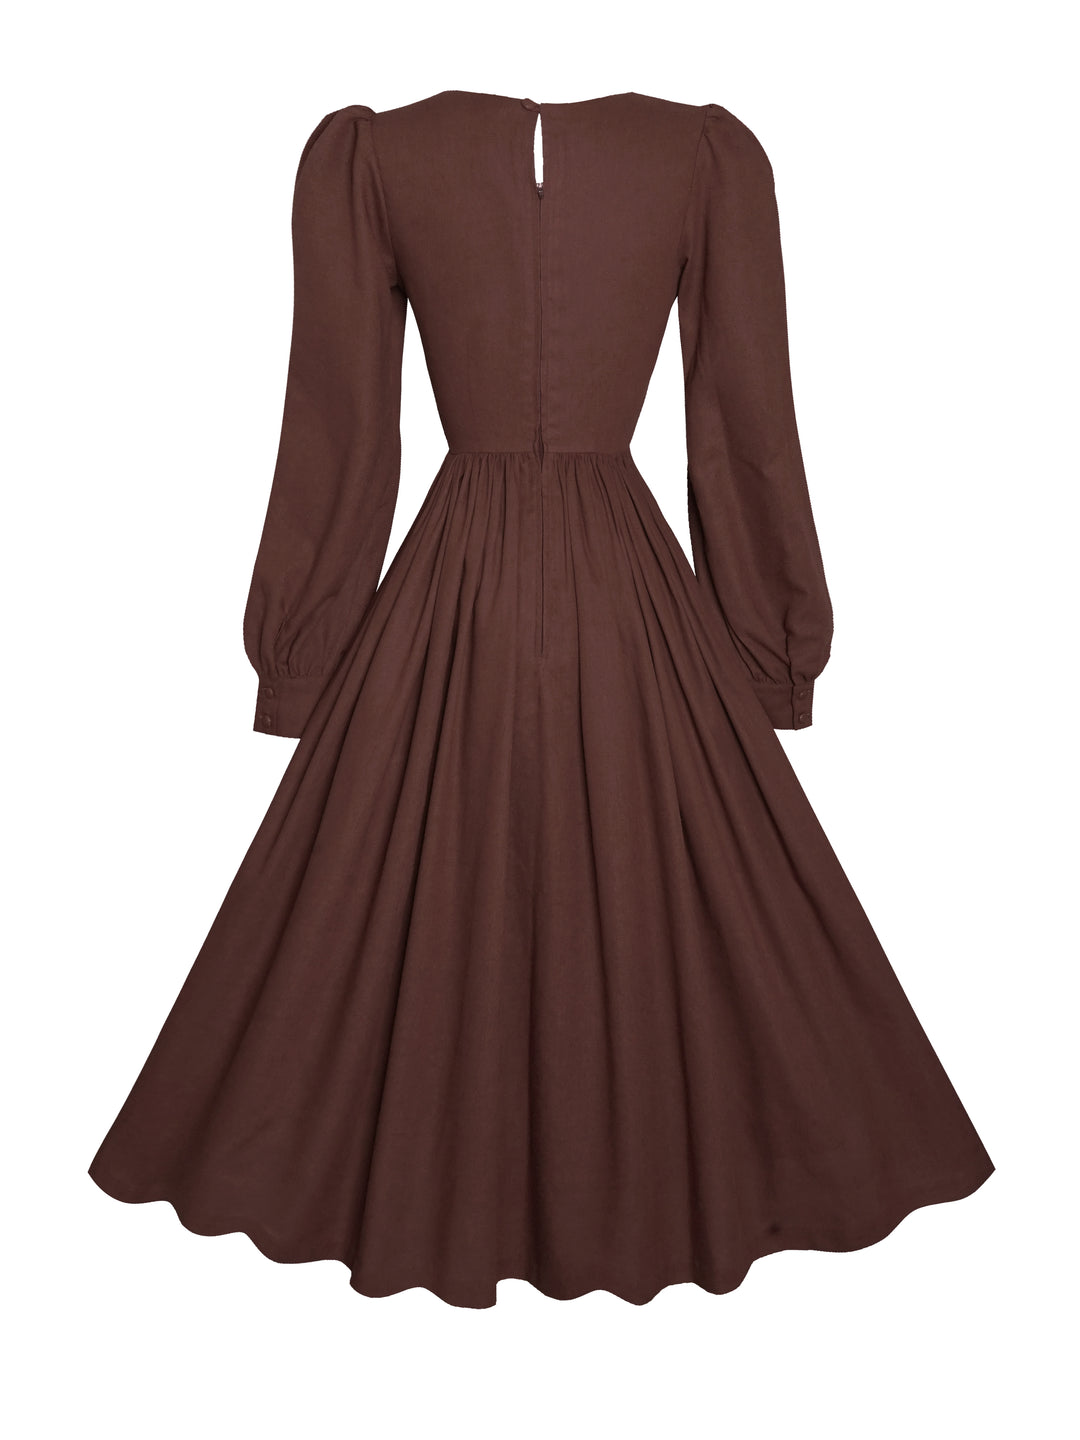 MTO - Agnes Dress in Walnut Linen